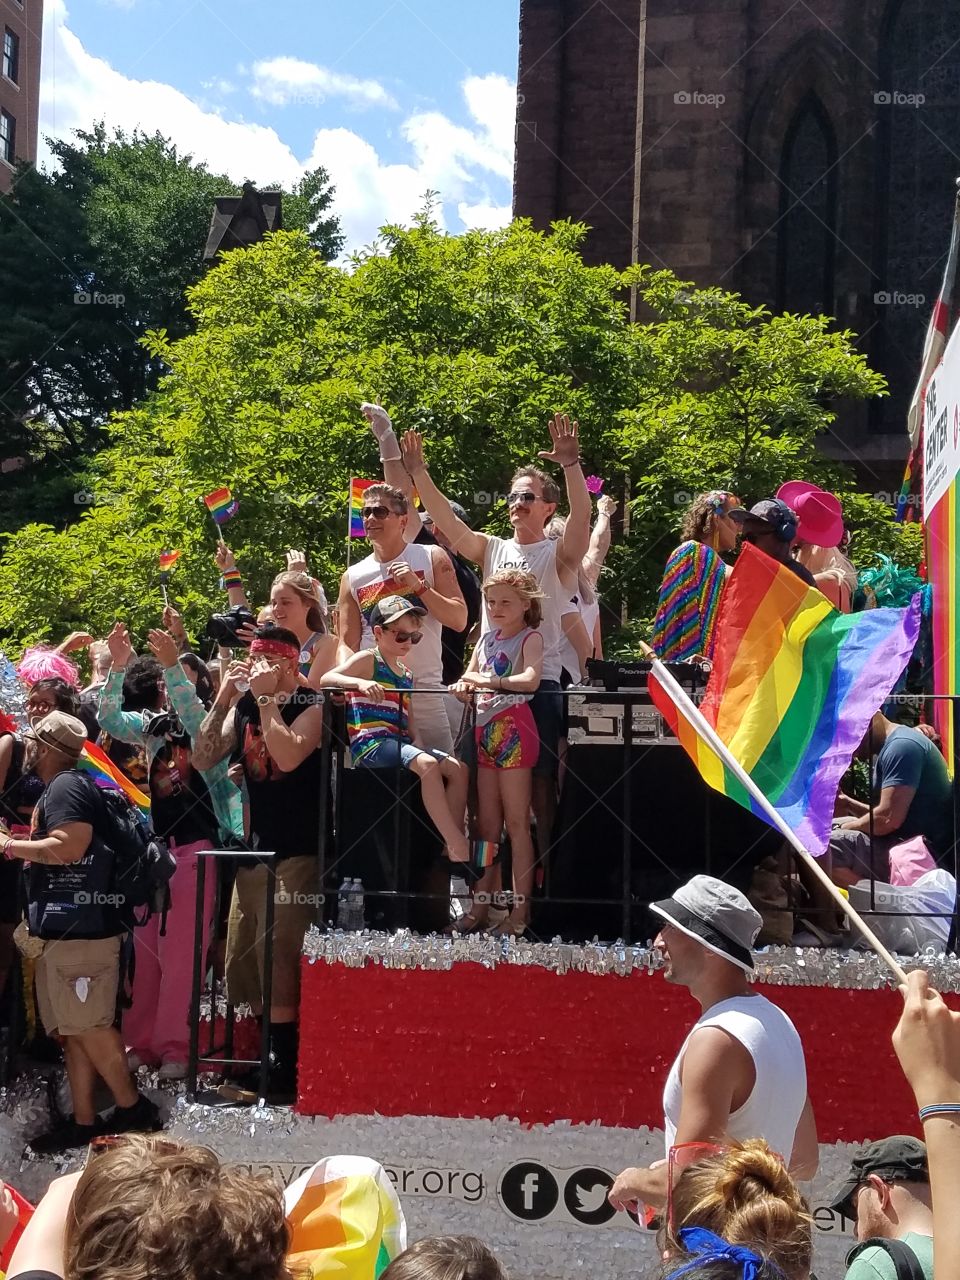 Neil Patrick Harris at World Pride 2019